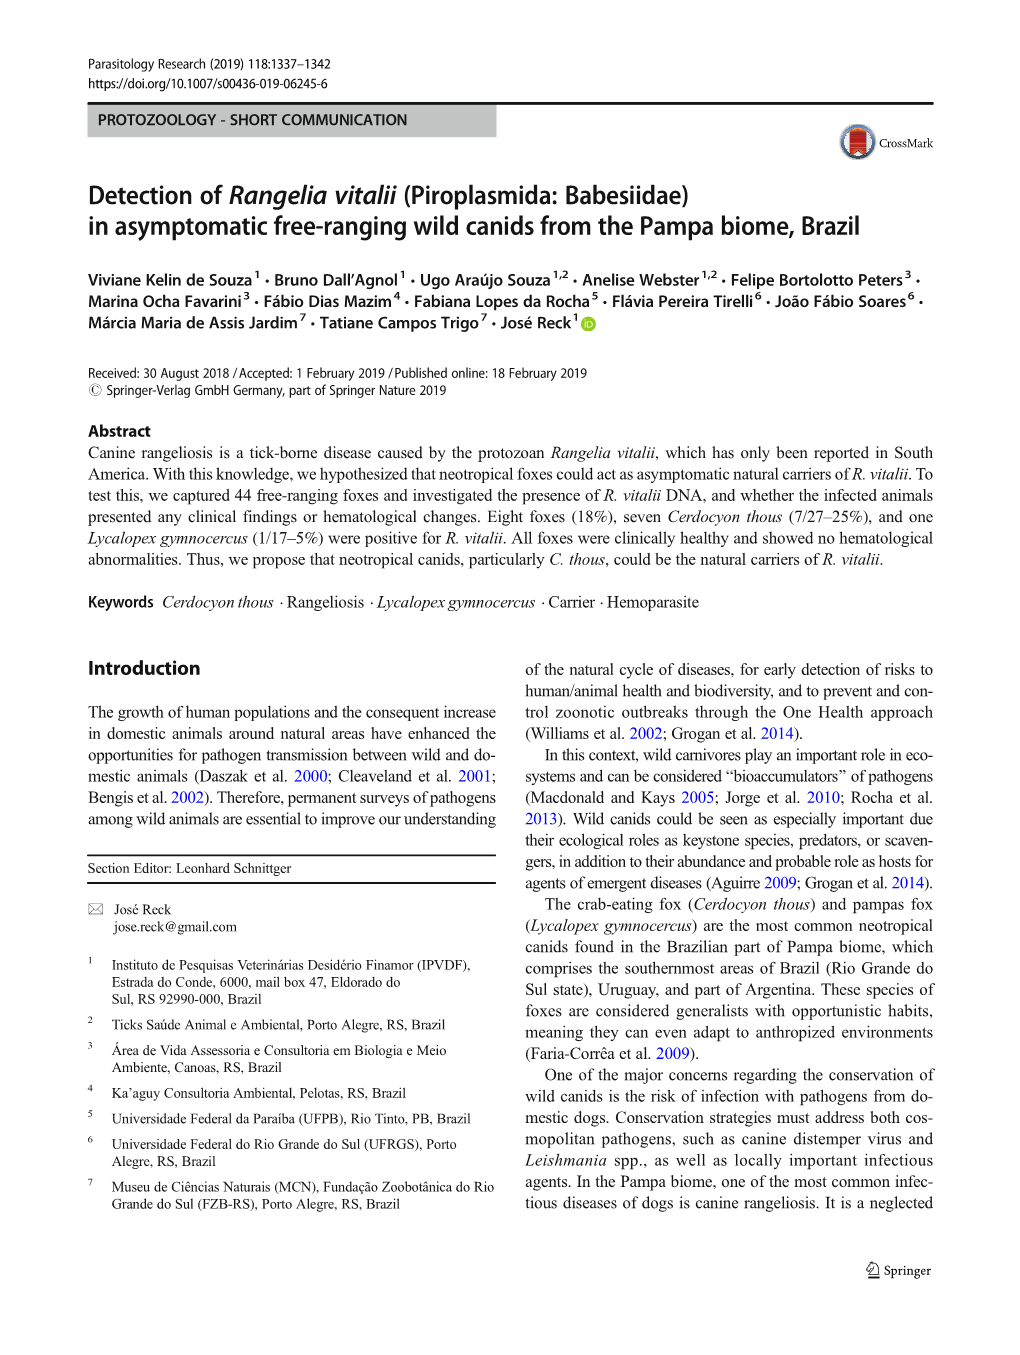 Detection of Rangelia Vitalii (Piroplasmida: Babesiidae) in Asymptomatic Free-Ranging Wild Canids from the Pampa Biome, Brazil